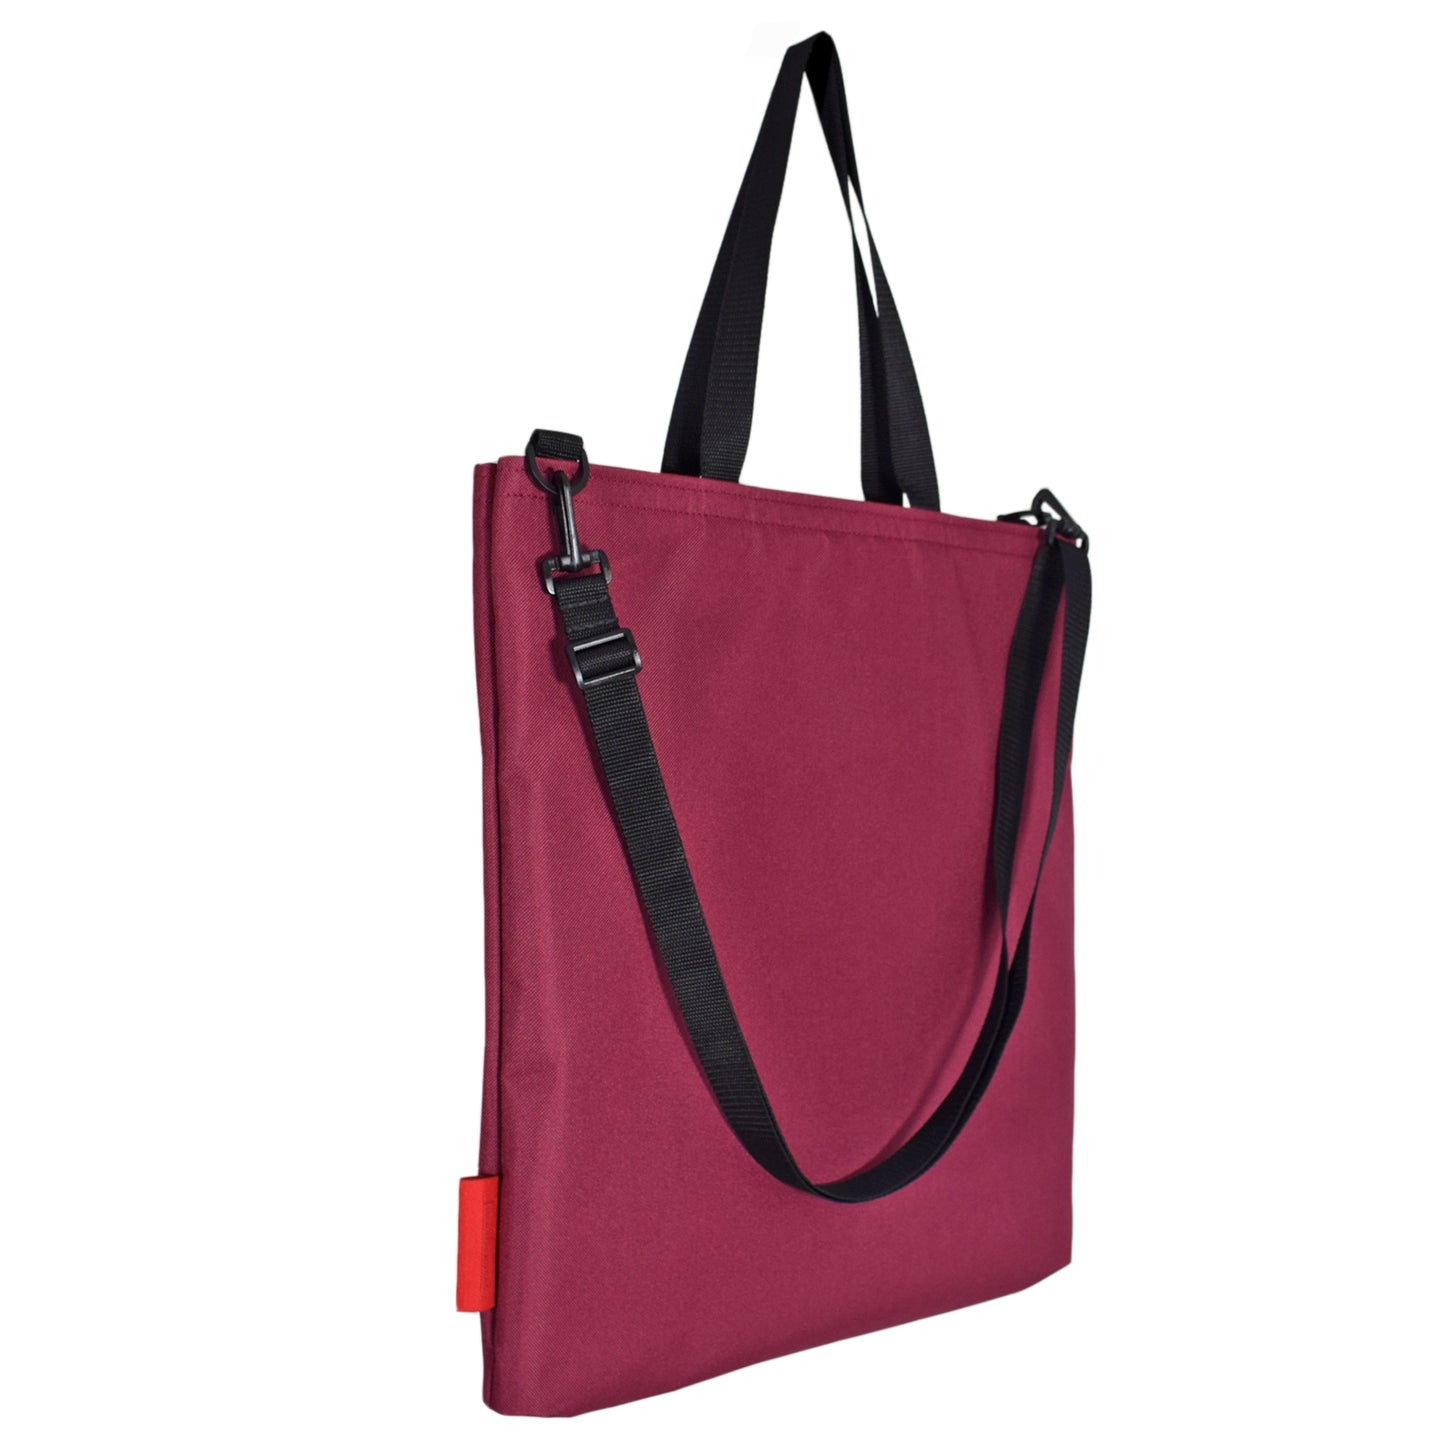 Plain tote bag in burgundy wine colour 